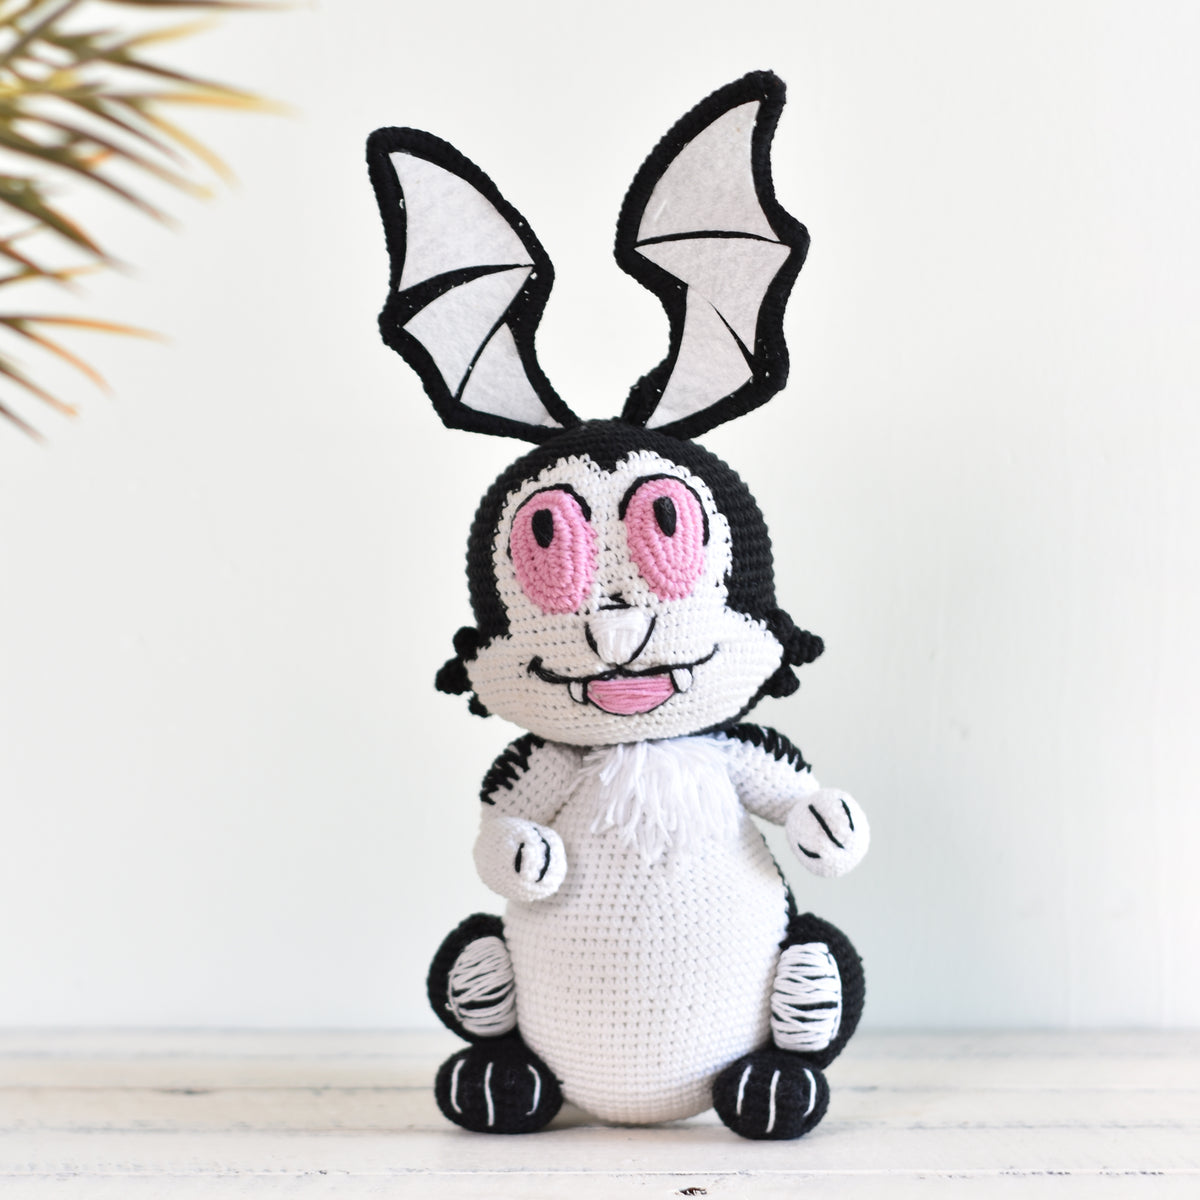 Sai Gon Made - Crochet Bunny Vampire, Amigurumi Bunnicula, Handmade Plushy  Toy, Stuffed Bunny 100% Handmade Material: Yarn Art Jeans from Turkey  Weight: 242g Size: 40cm Height x 16cm Width x 11cm